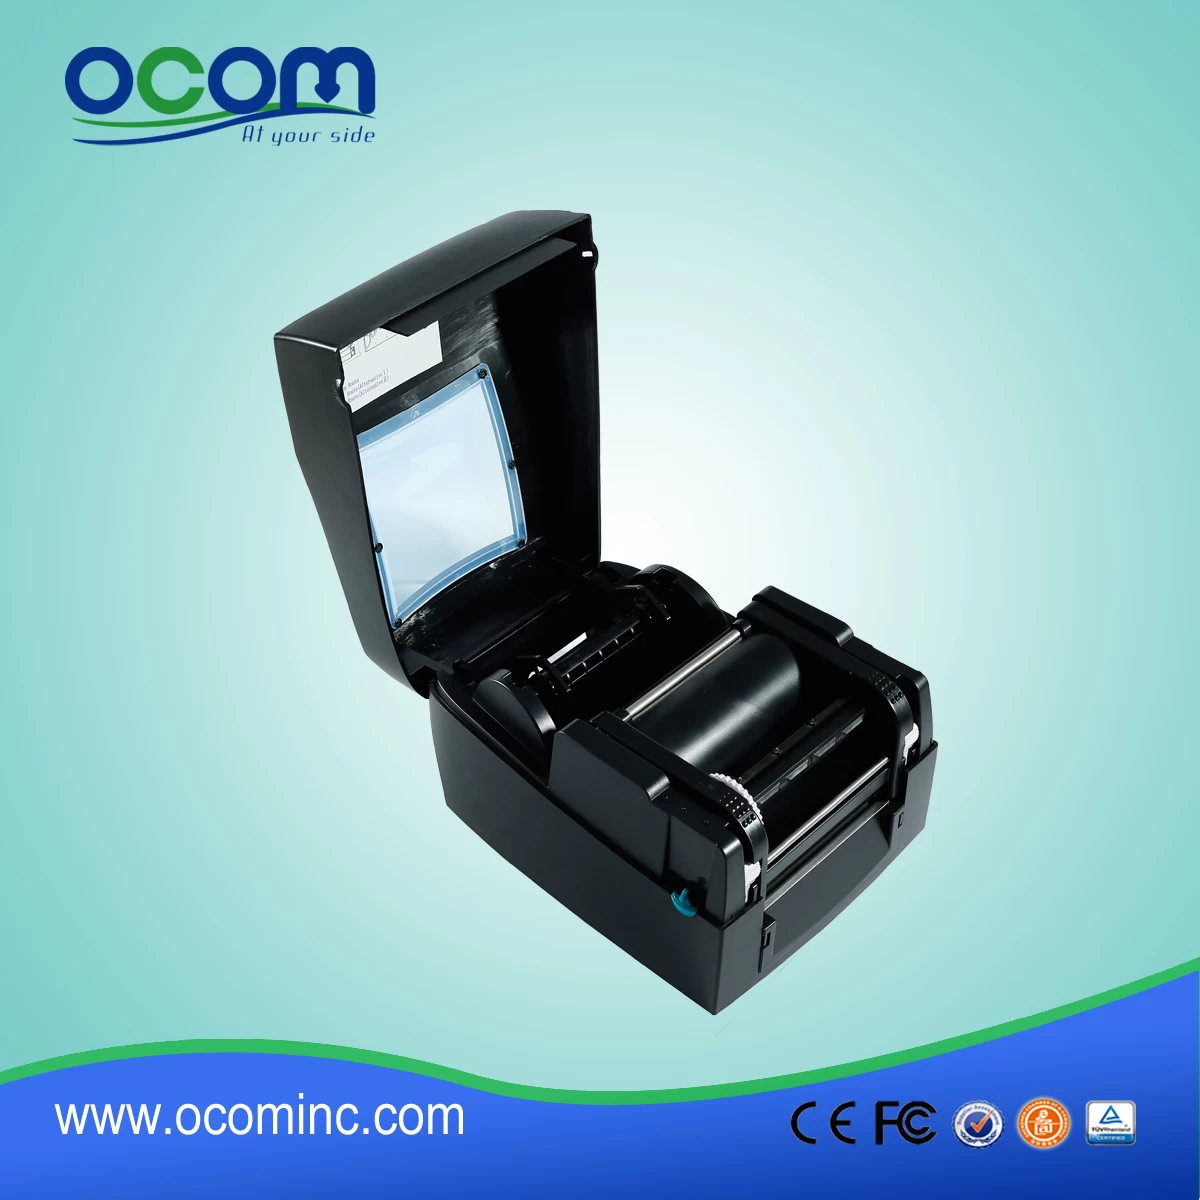 (OCBP-002) Thermal Transfer and Direct Thermal Barcode Label Printer